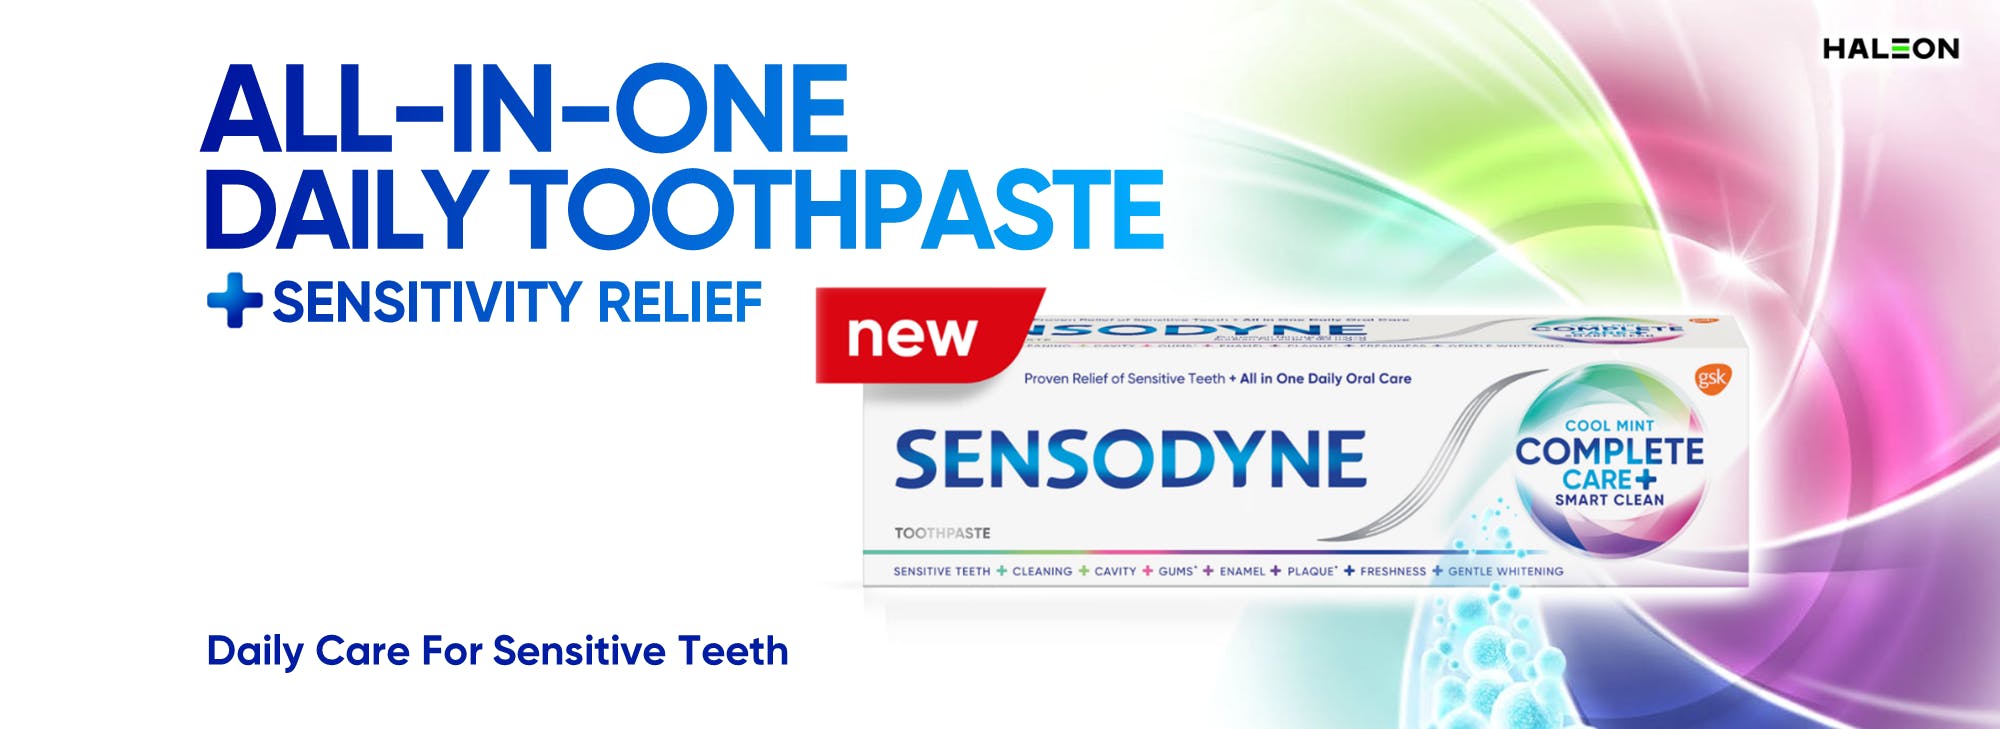 Sensodyne Nourish product range